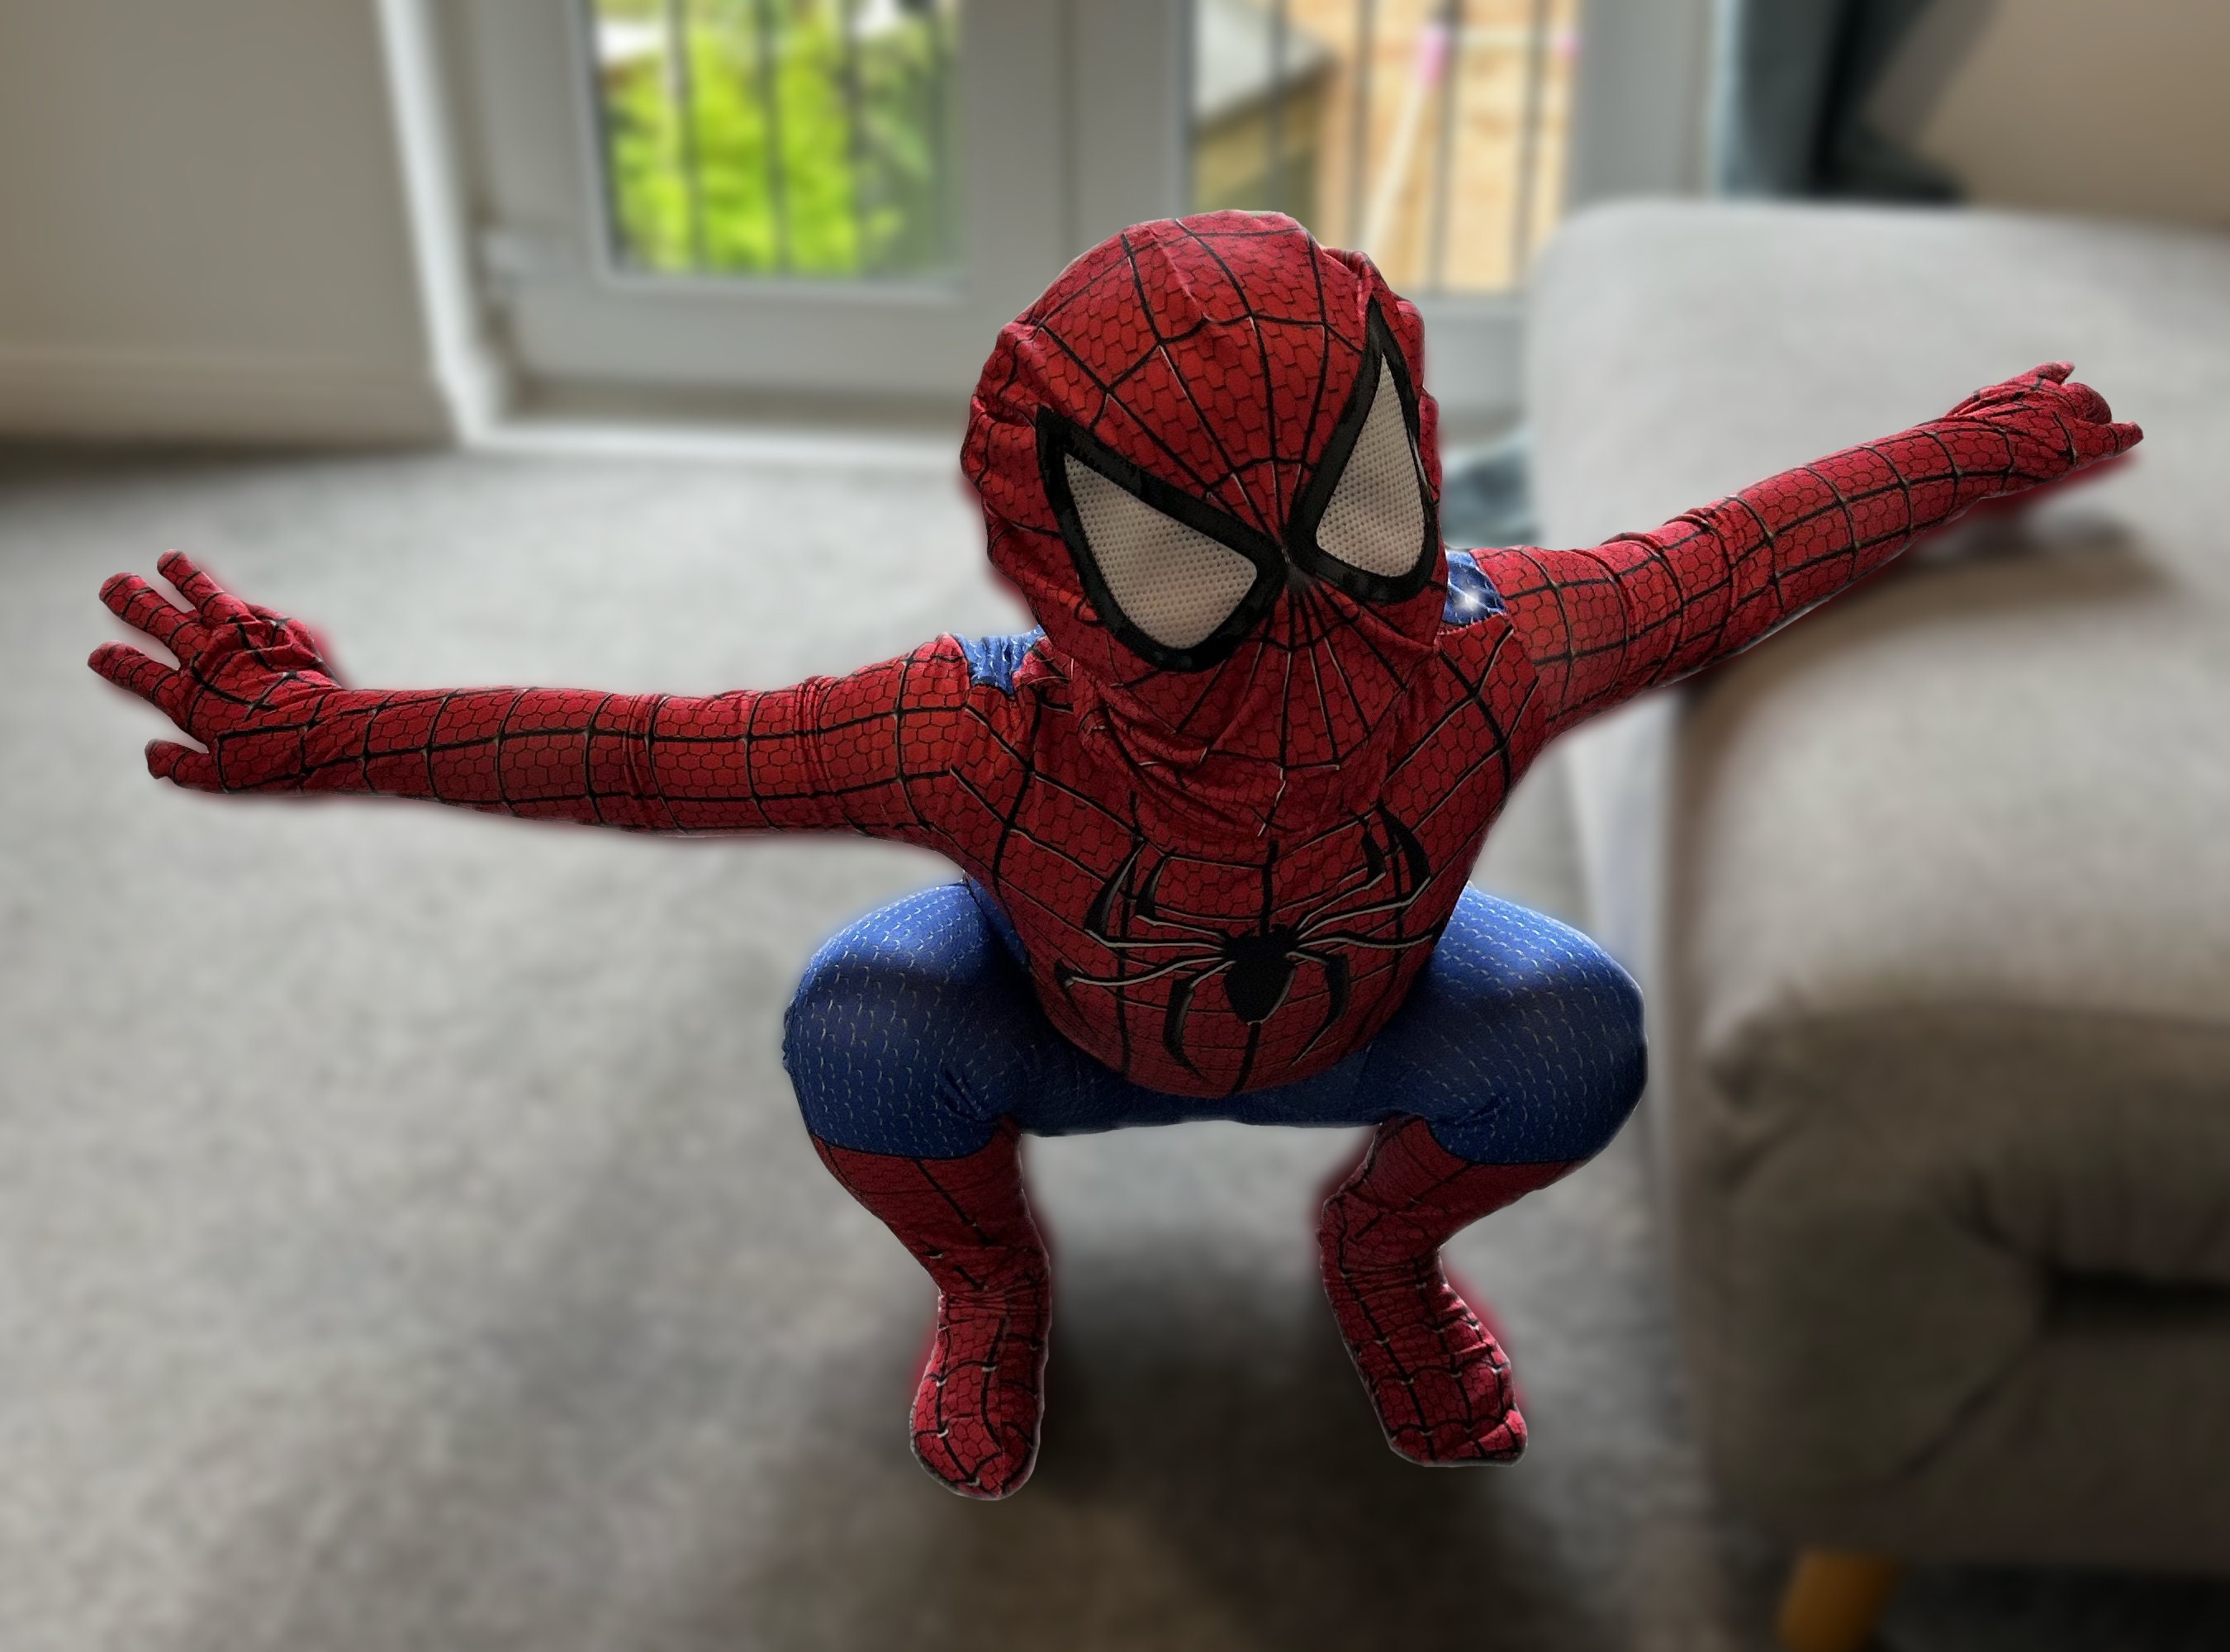 Spiderman dress